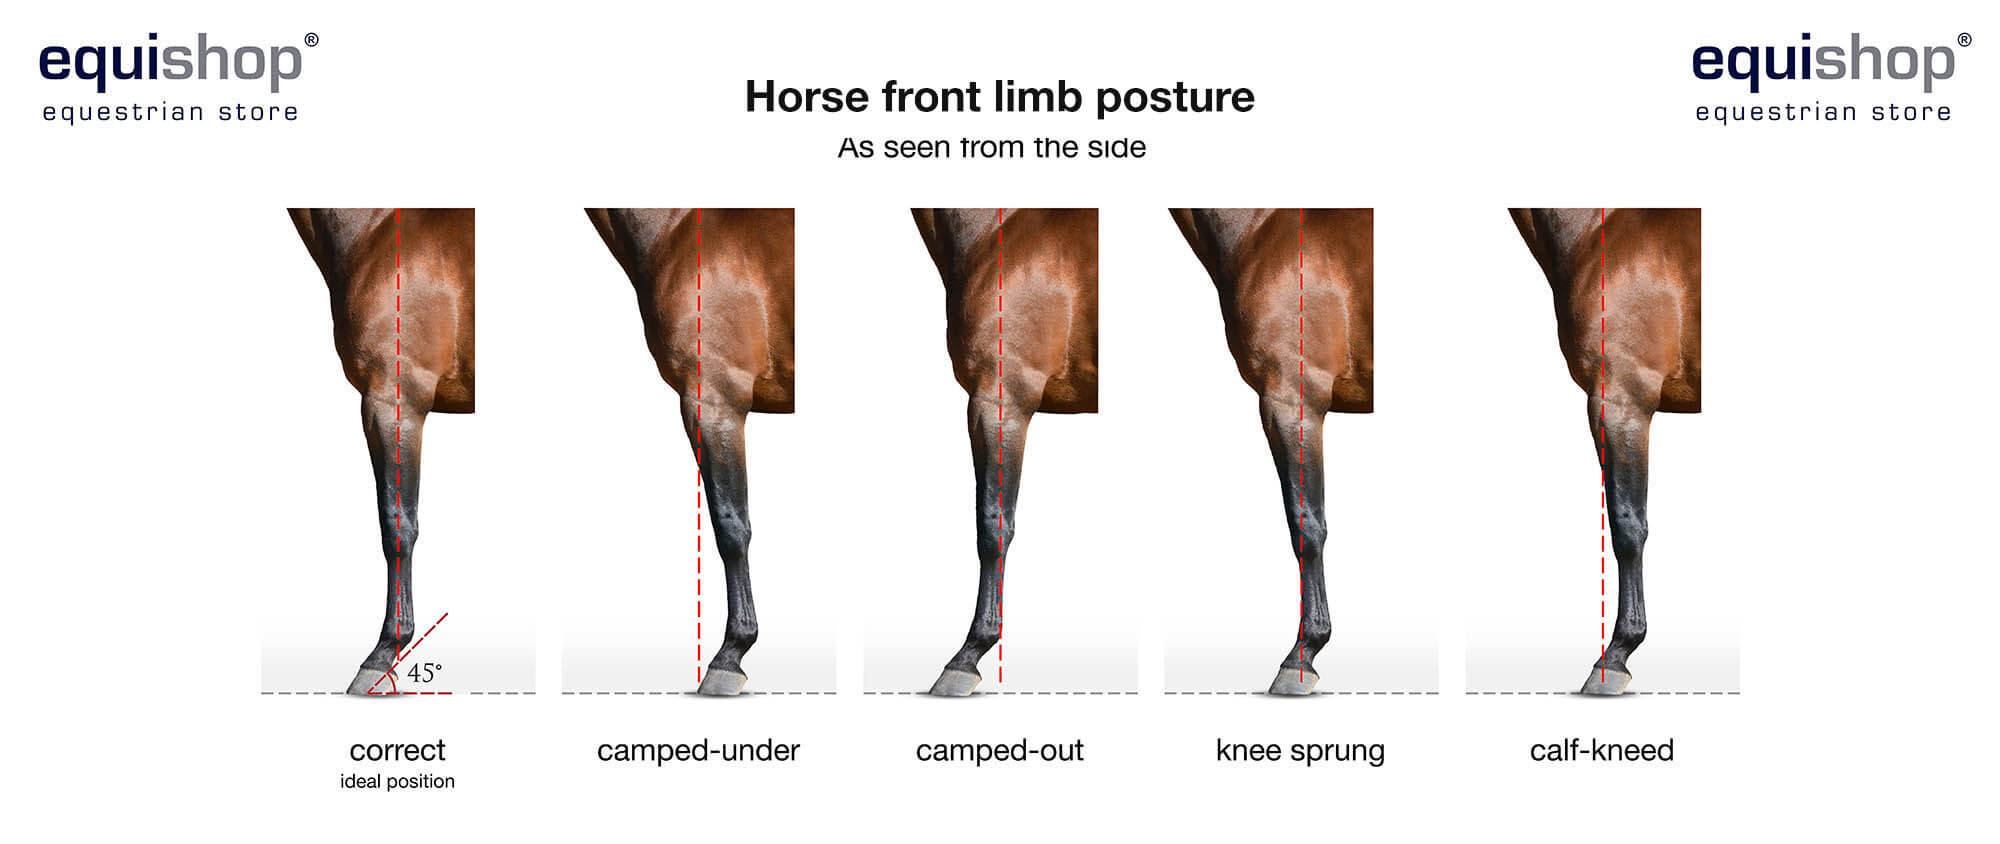 https://cdn.equishop.com/img/cms/horse-anatomy/horse-front-limb-posture.jpg